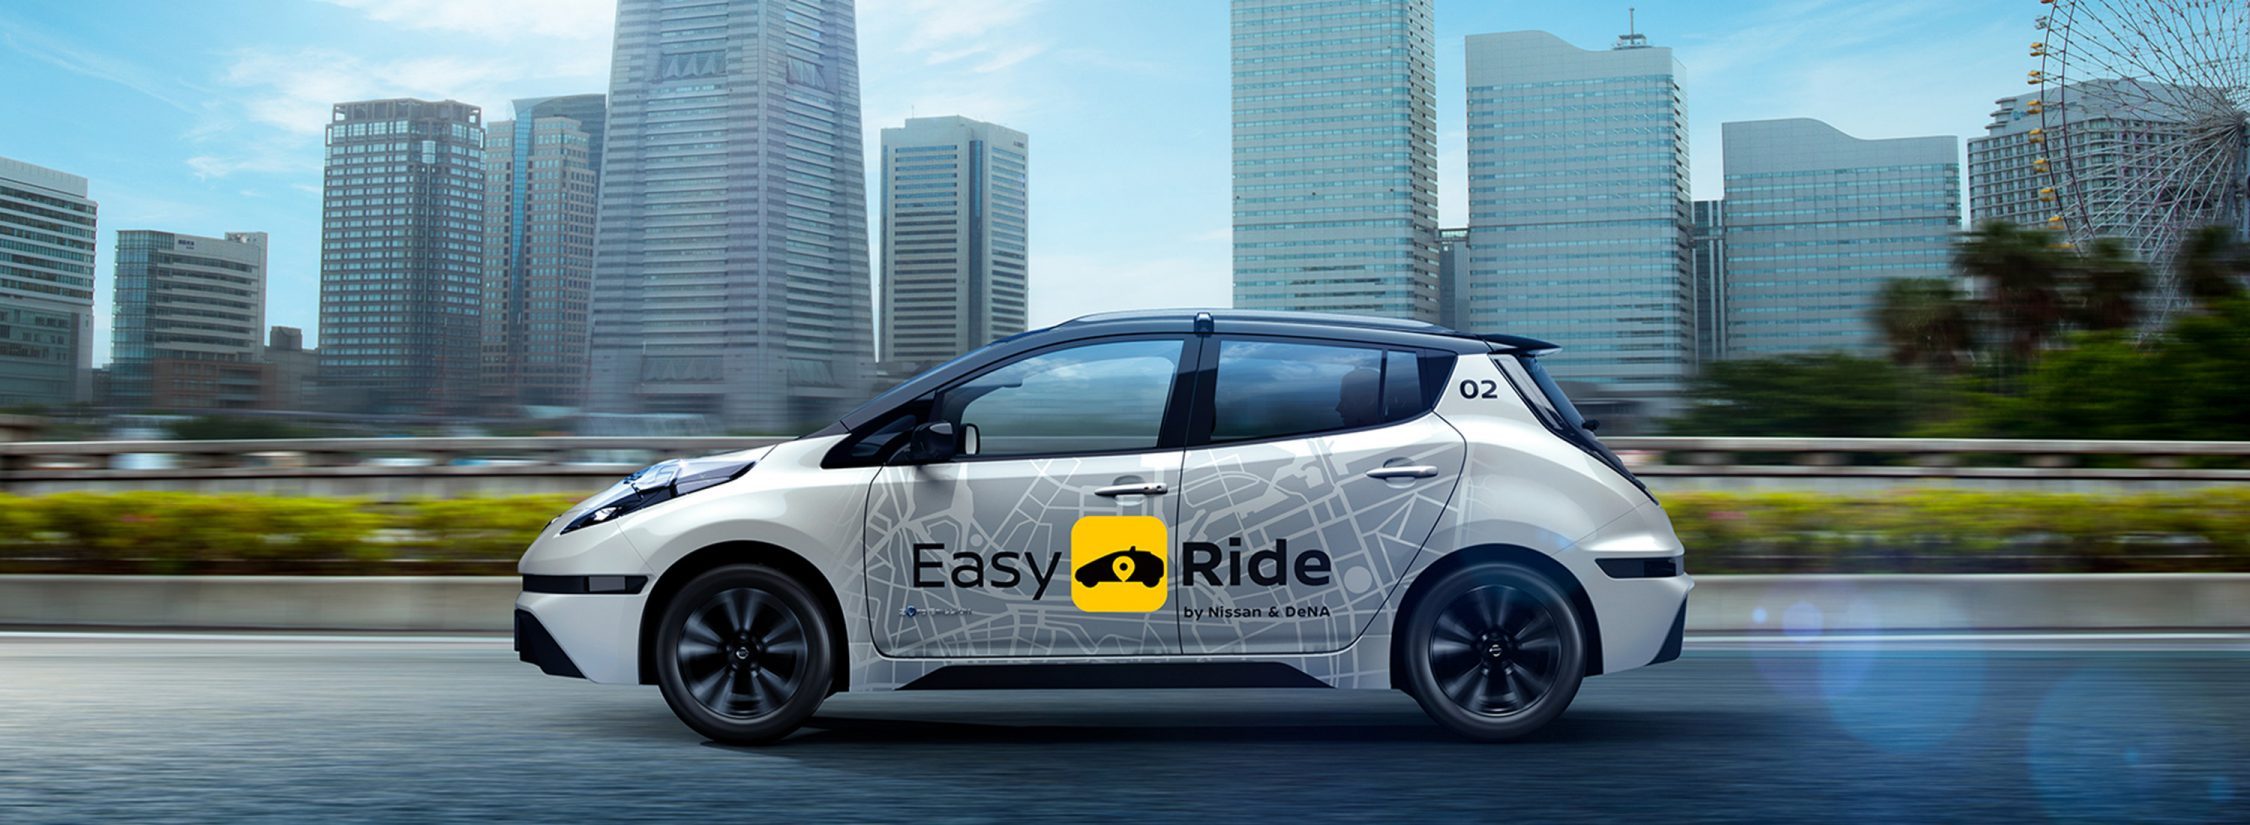 Nissan Easy Ride robo-taxi with city skyline